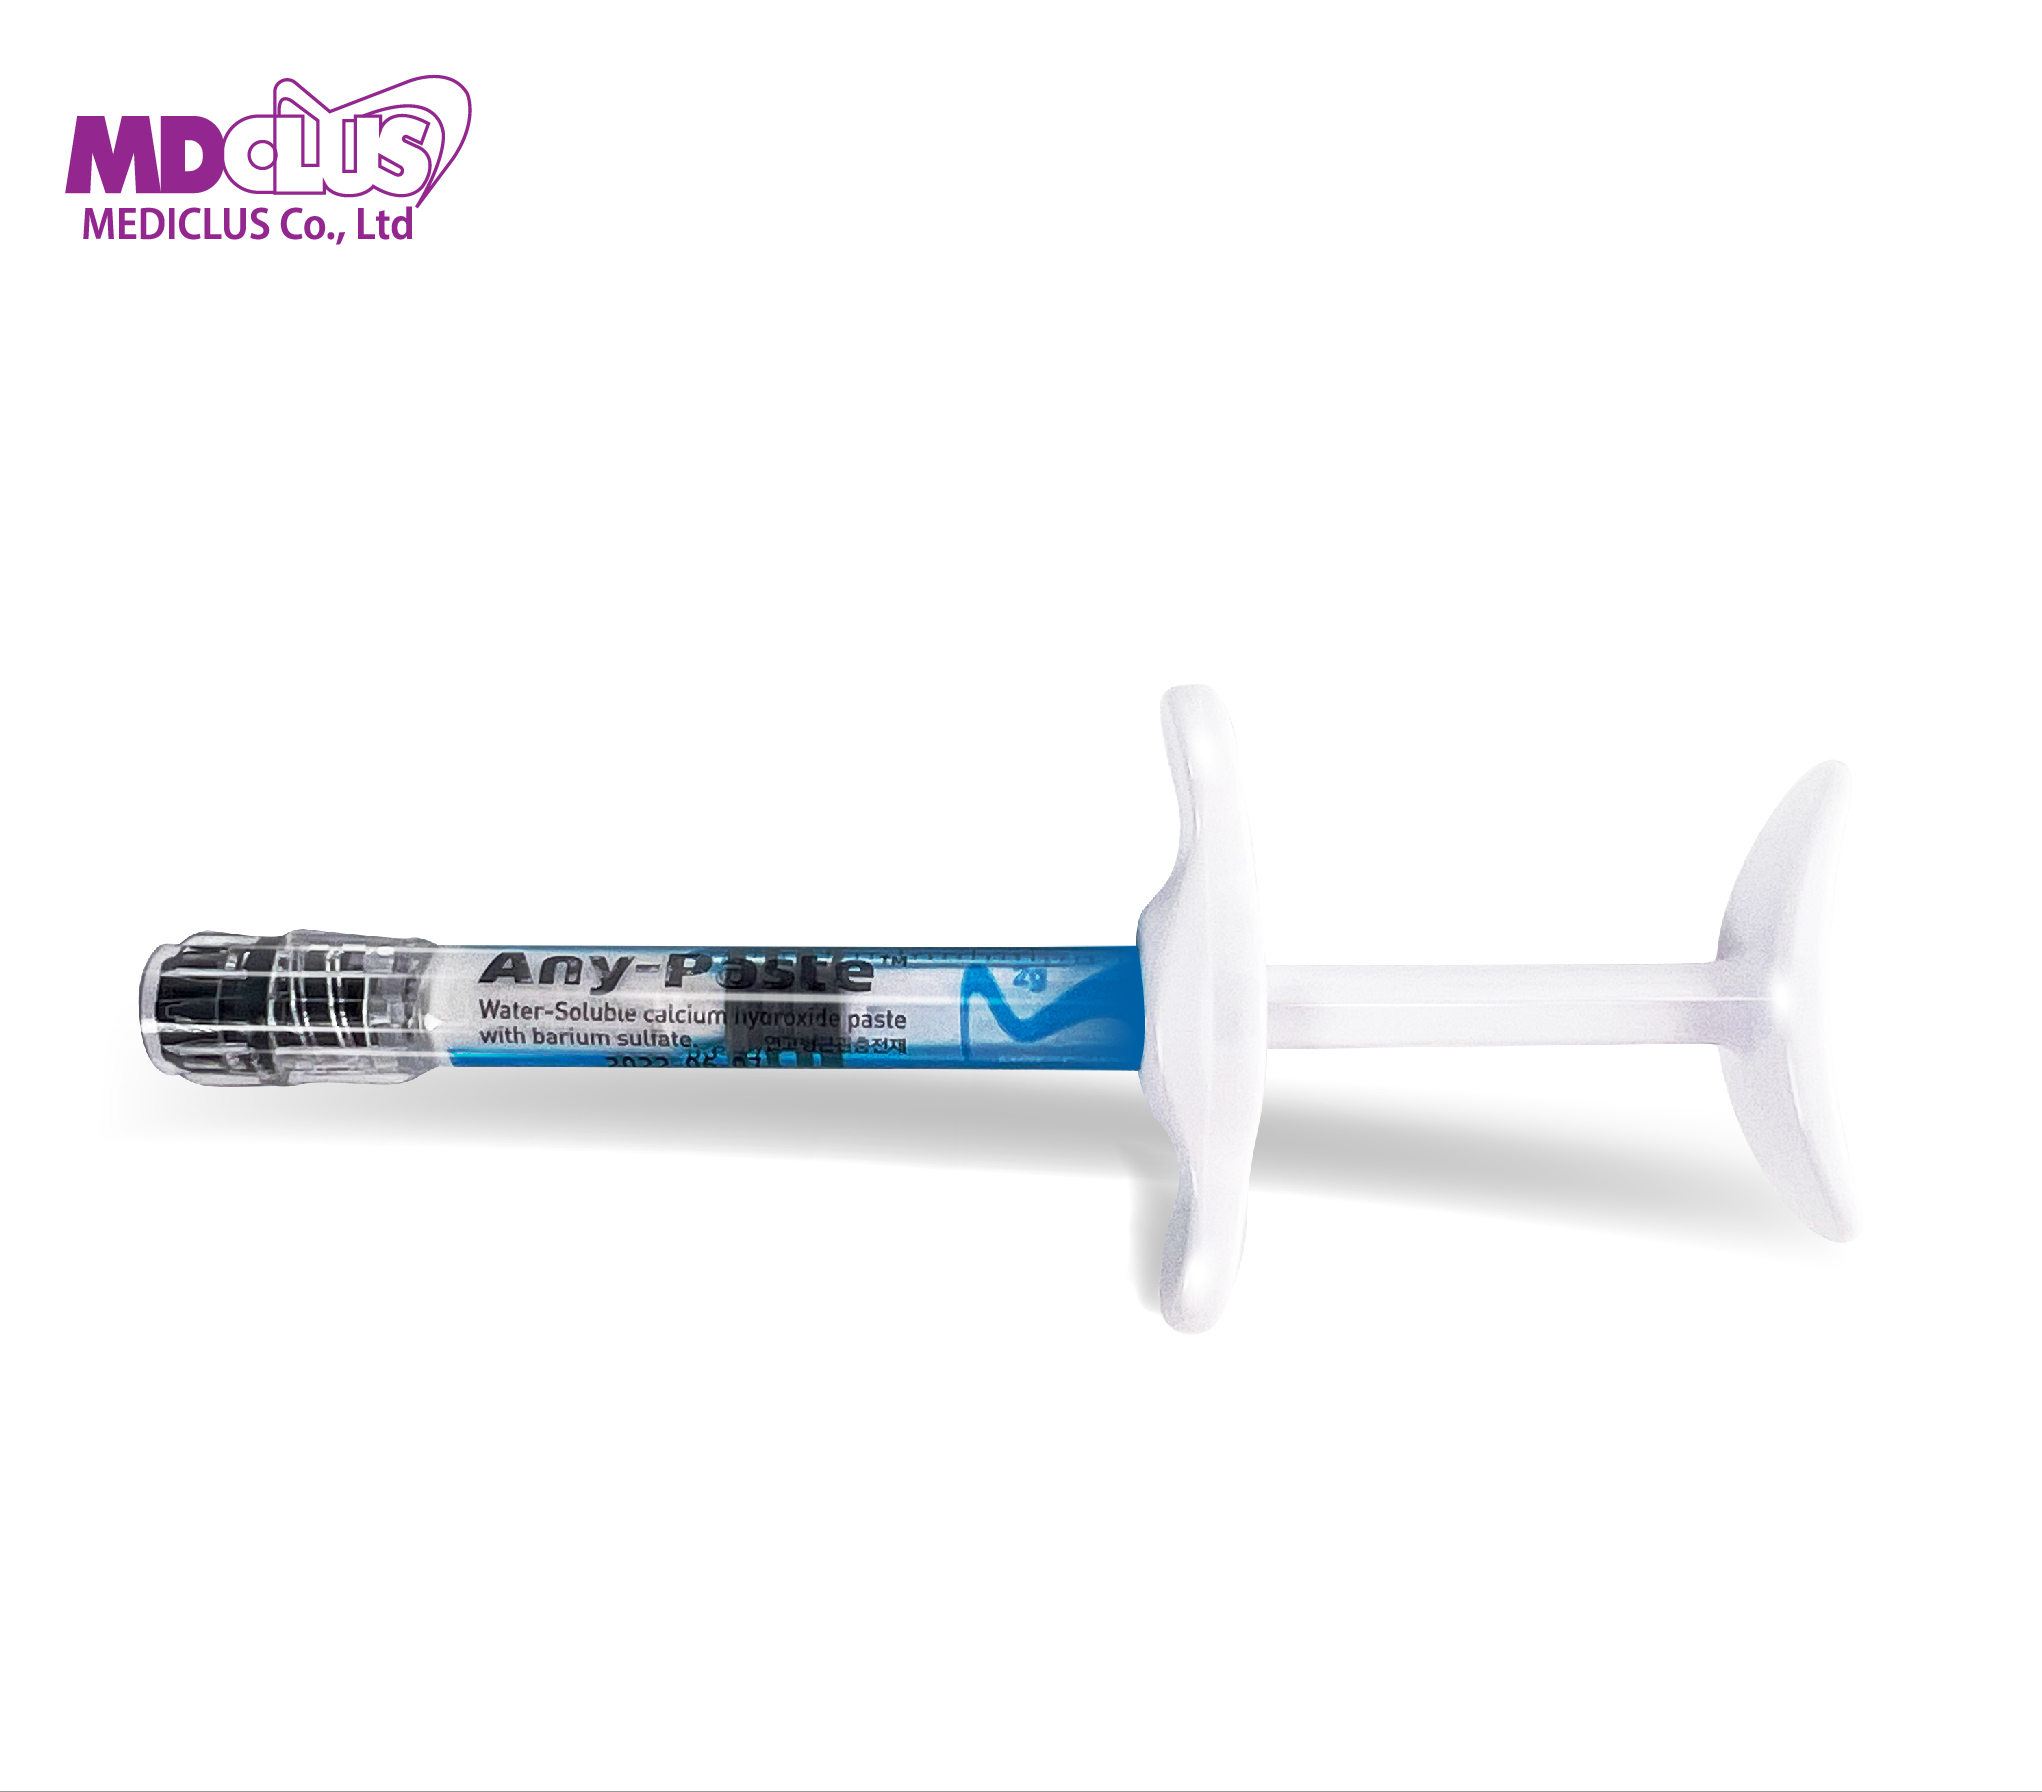 Mediclus Endo- Solution Kit